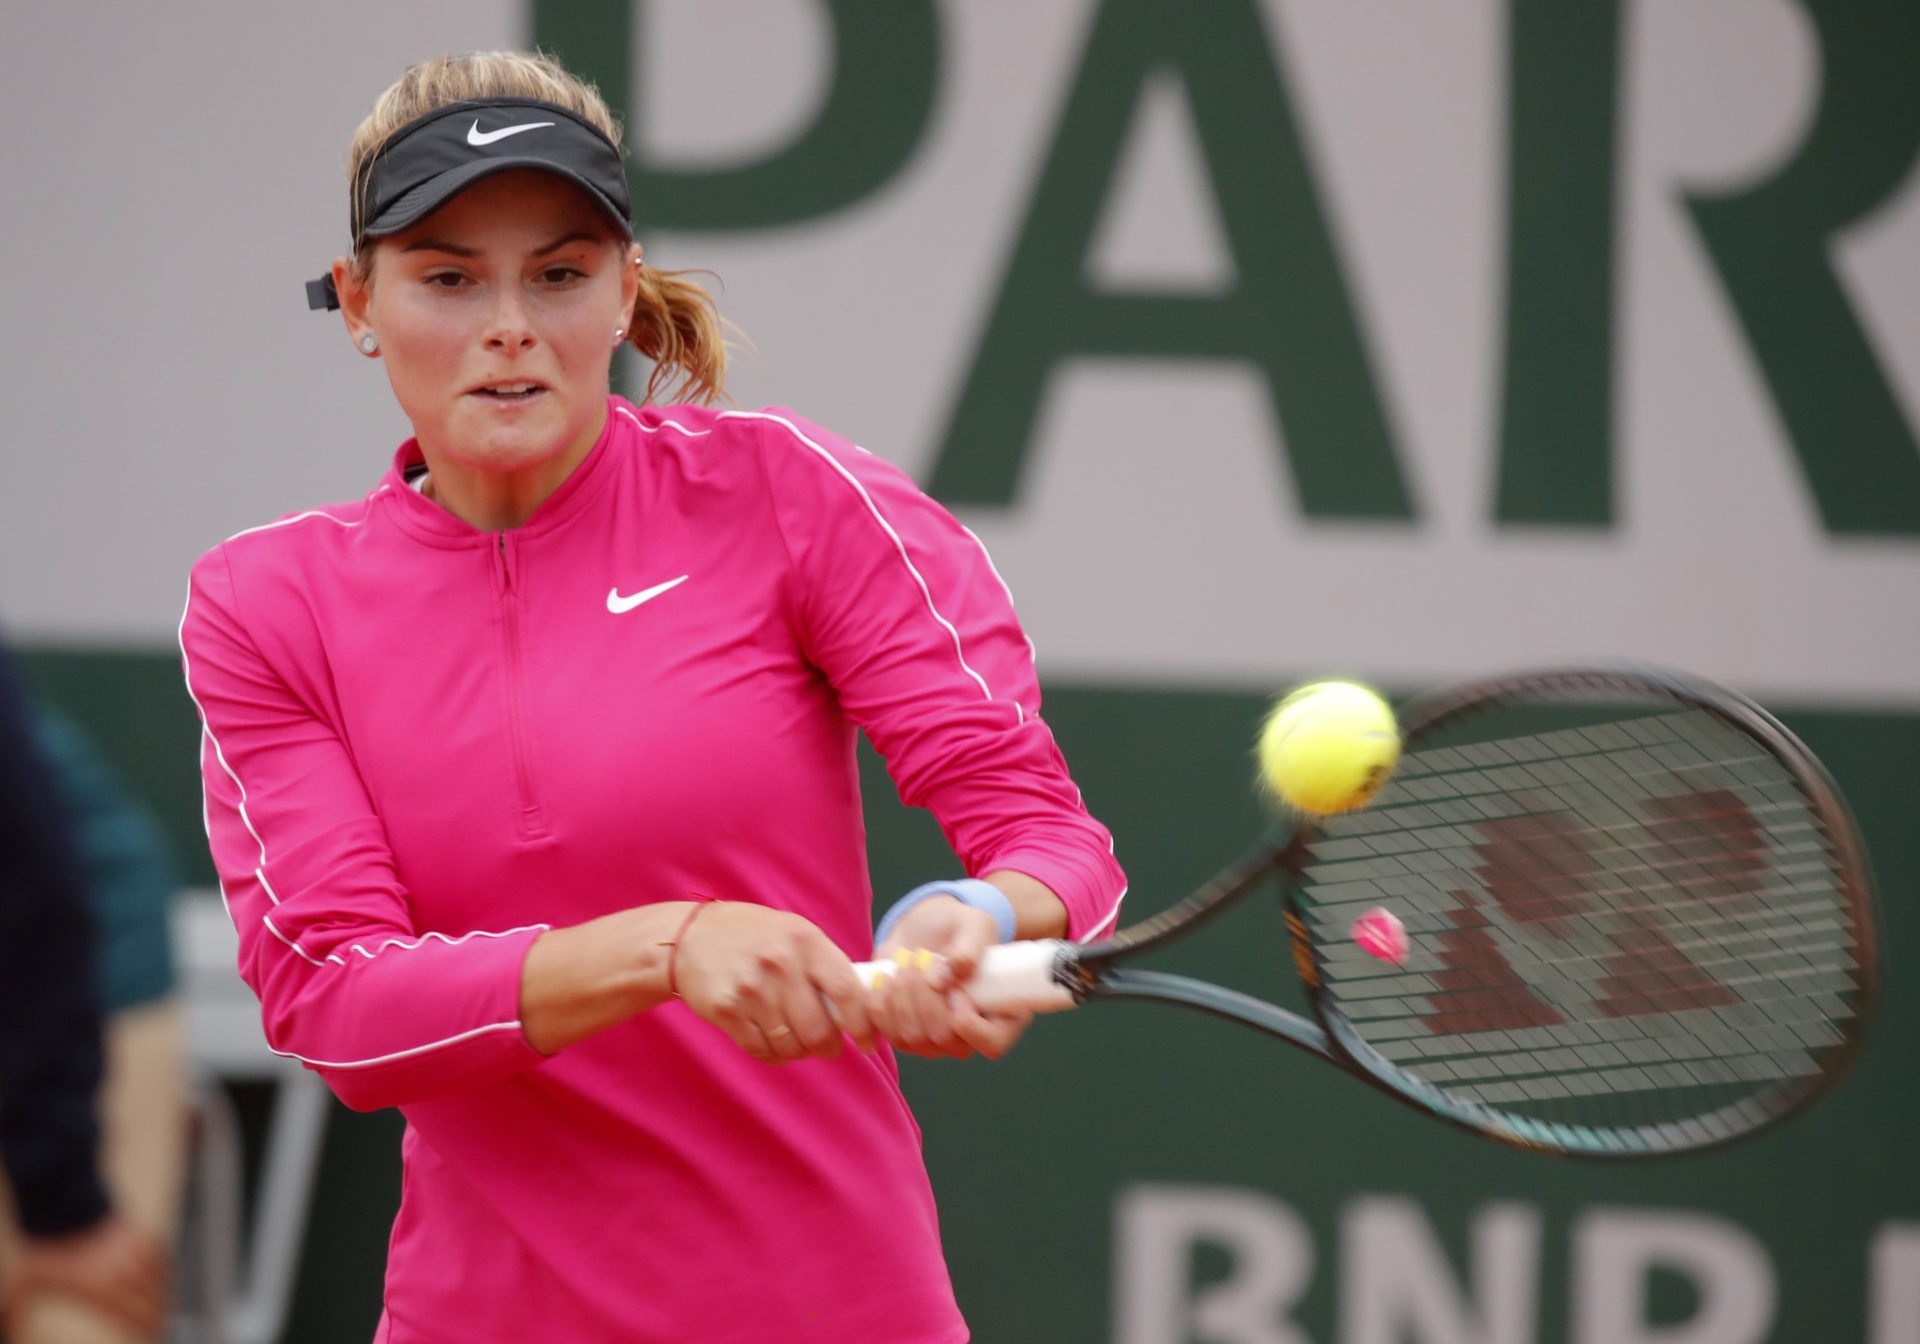 Katarina Zavatska lors de son match de premier tour à Roland-Garros 2020